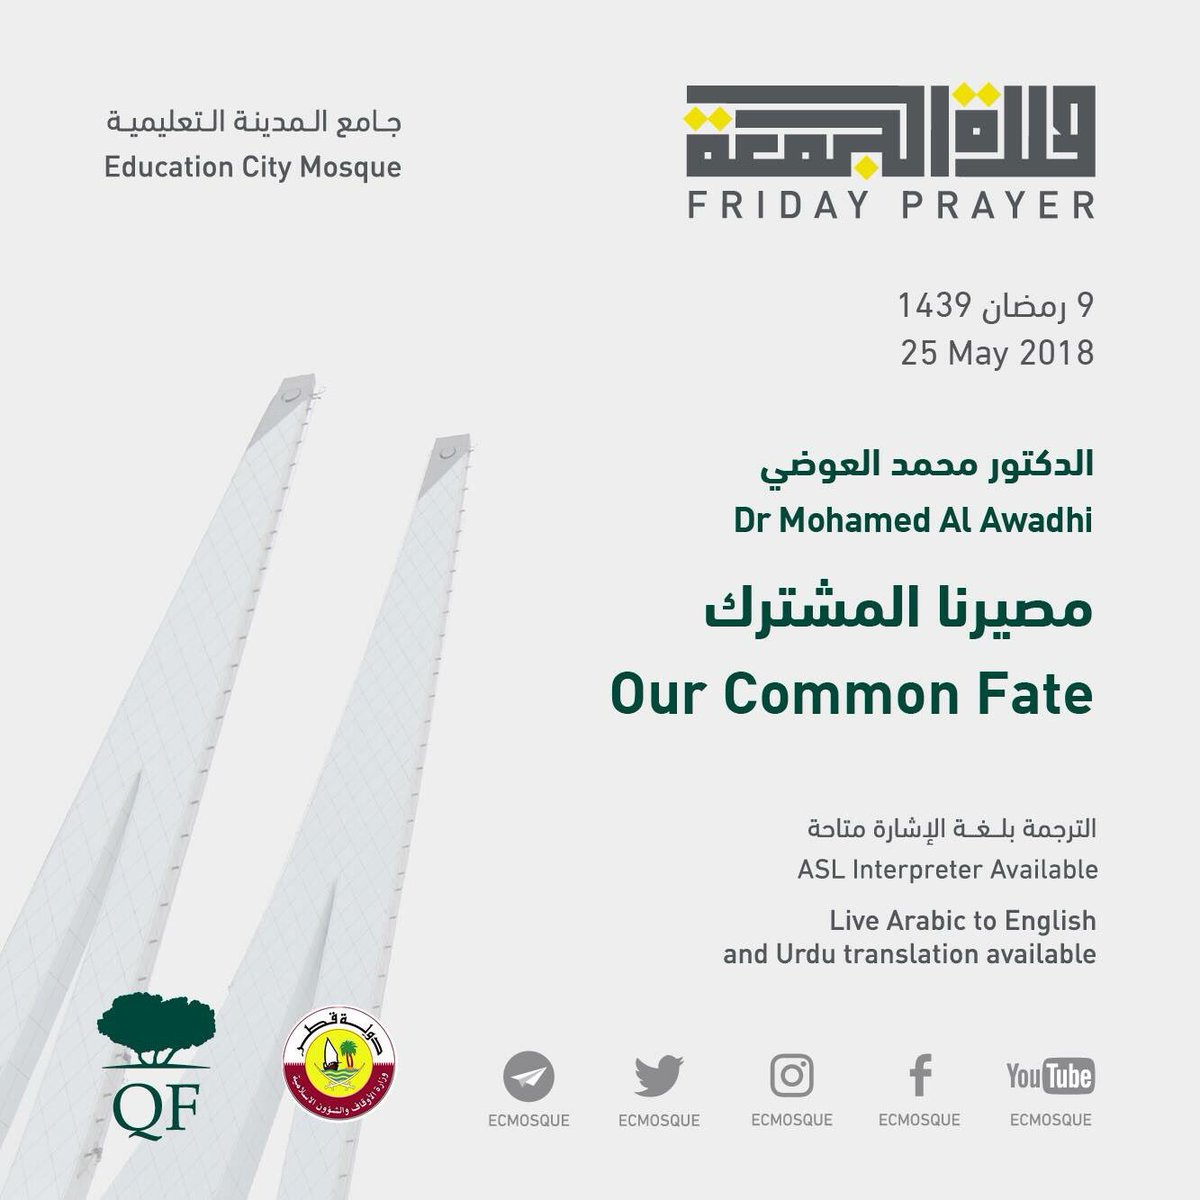 #Friday Prayers will be held at #EducationCityMosque! #Qatar